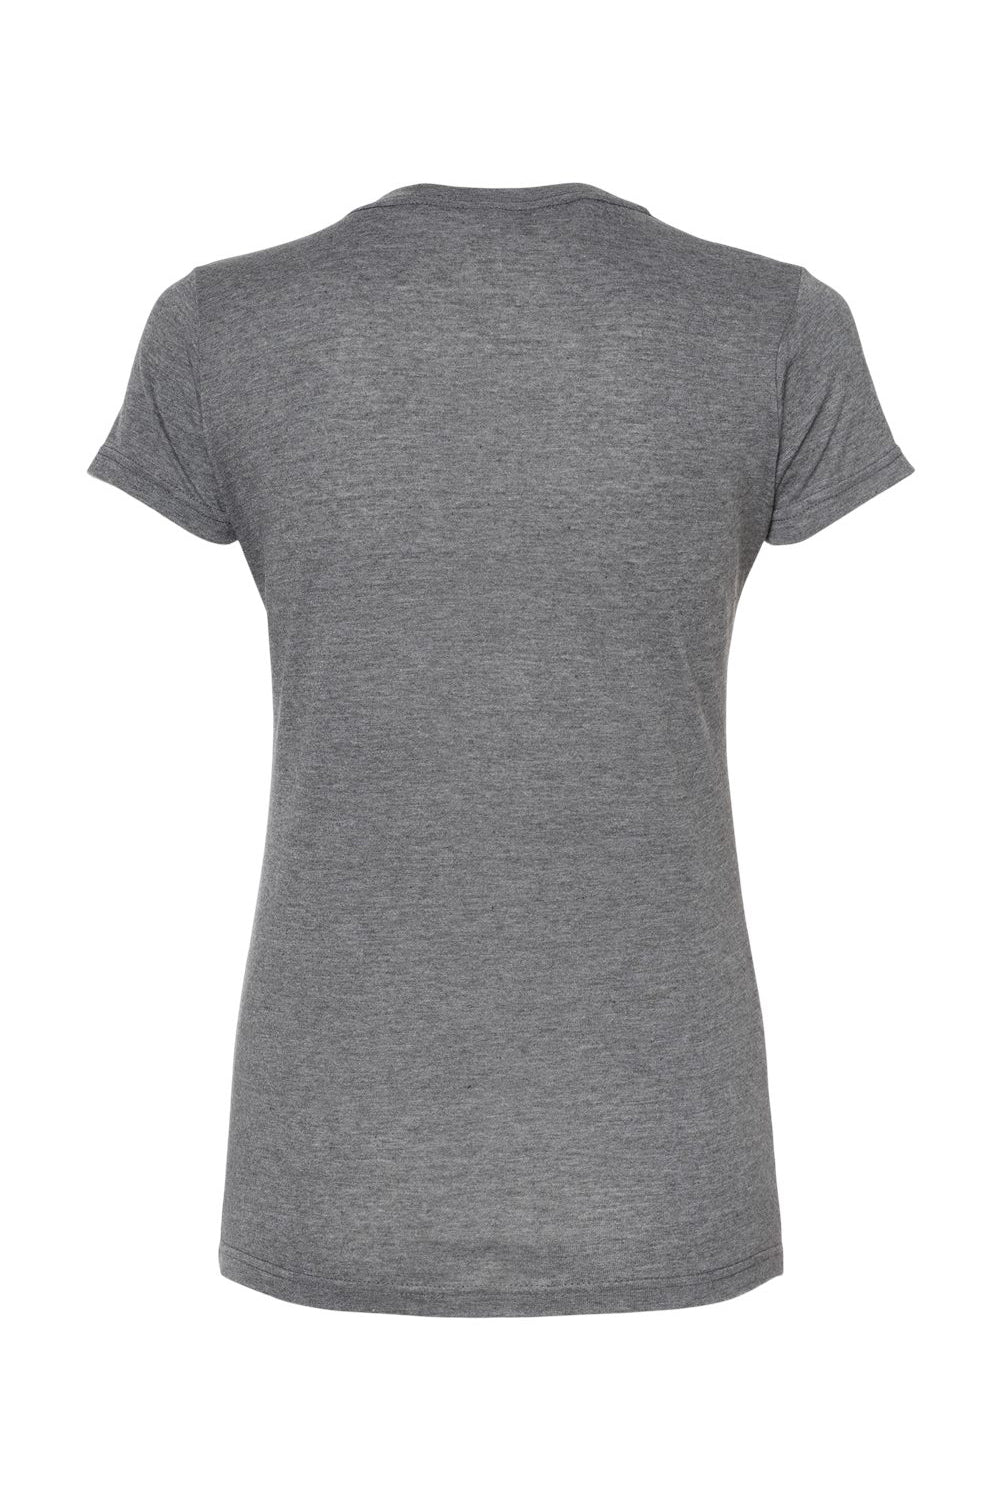 Tultex 240 Womens Poly-Rich Short Sleeve Crewneck T-Shirt Heather Charcoal Grey Flat Back